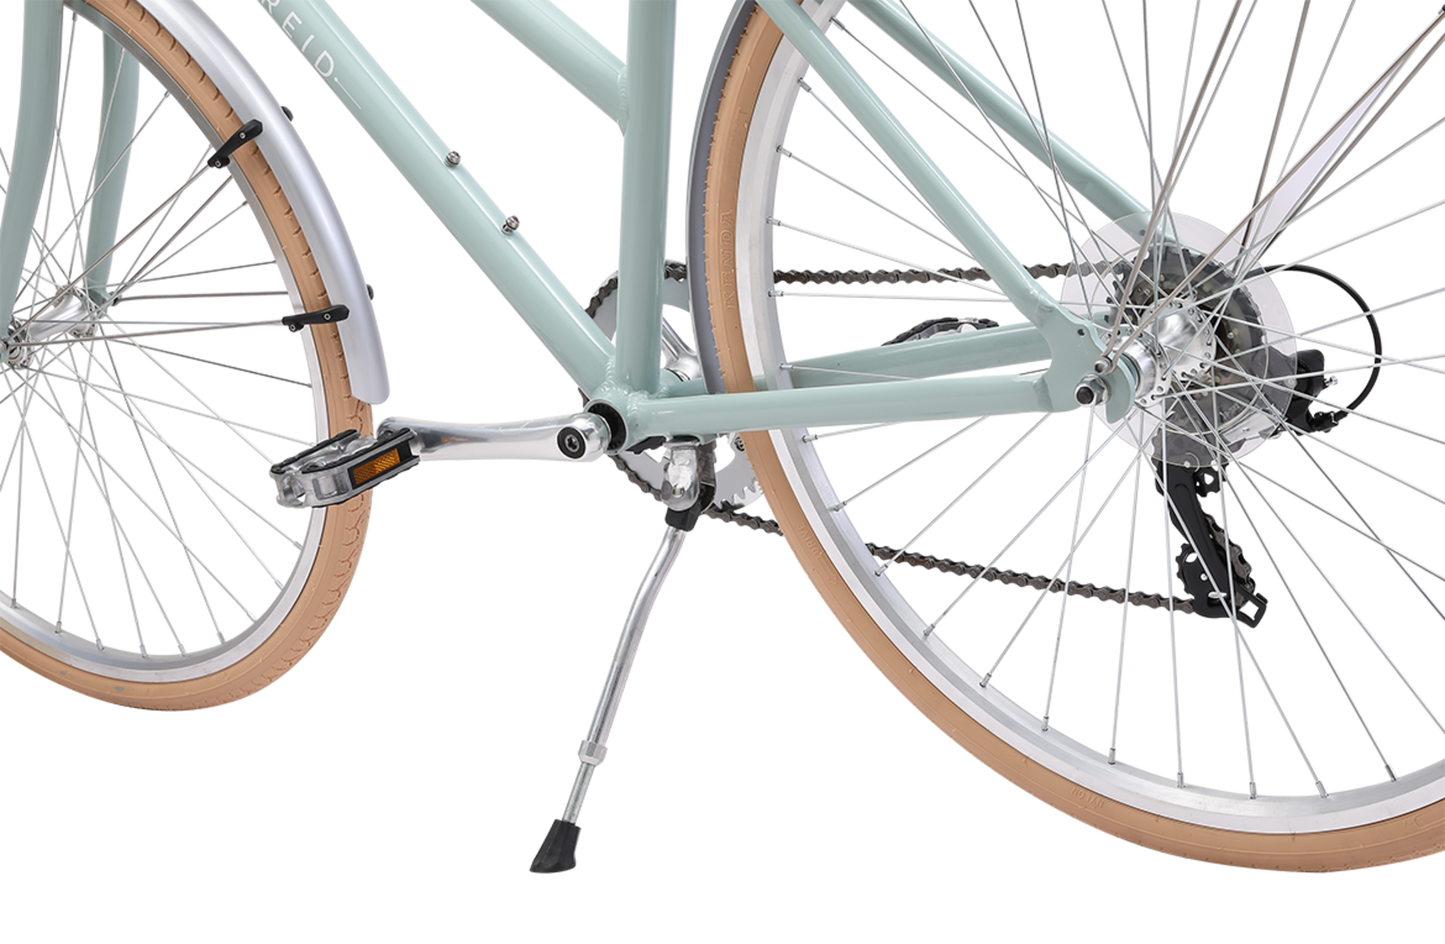 Ladies Esprit Superlite Vintage bike in Sage showing alloy kickstand from Reid Cycles Australia